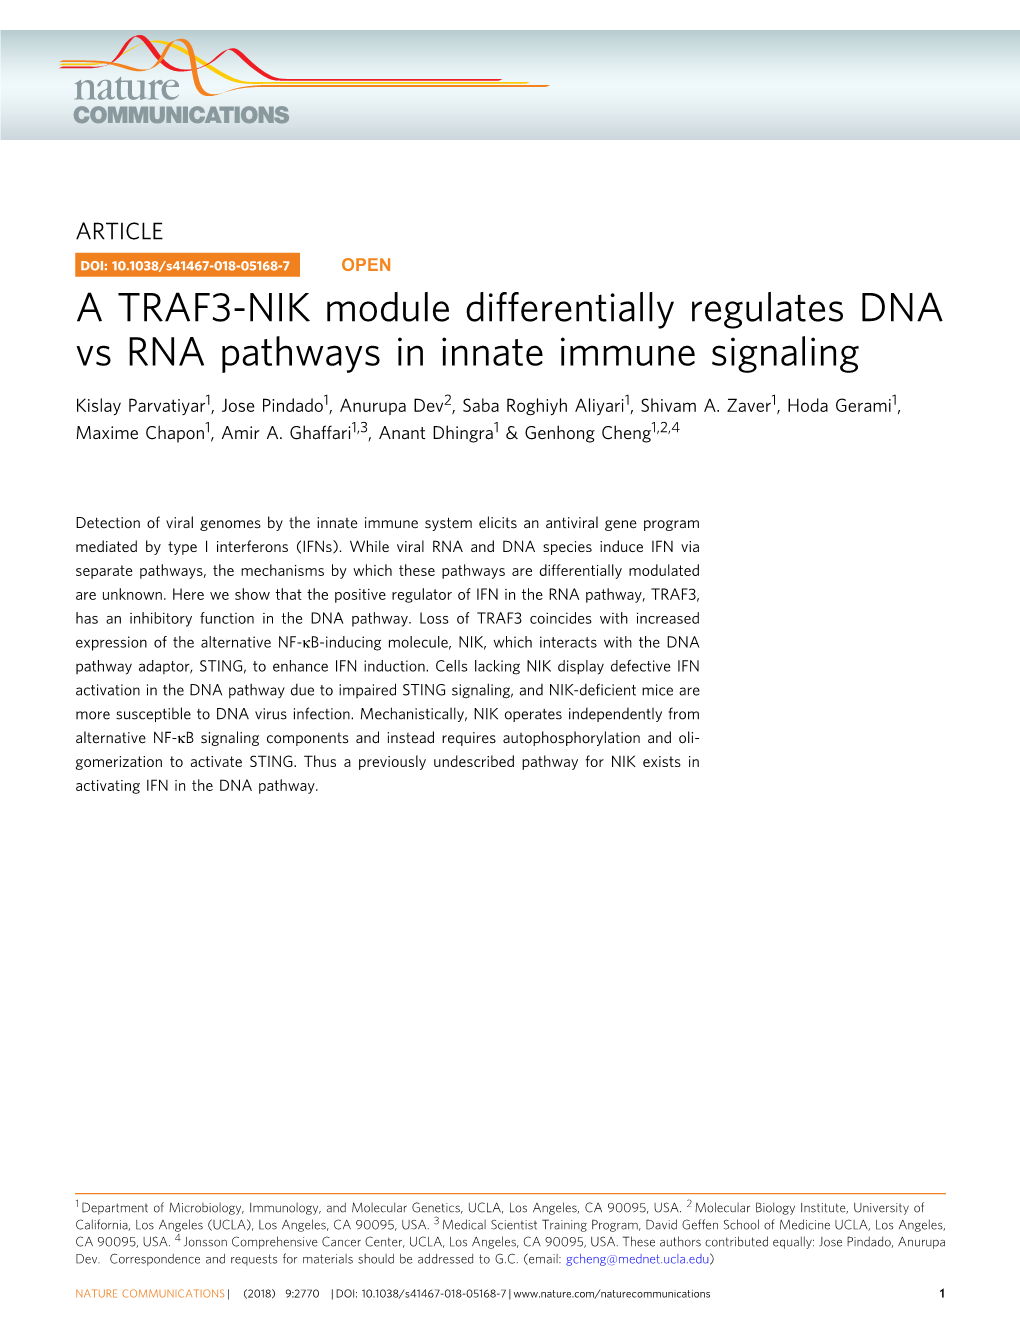 A TRAF3-NIK Module Differentially Regulates DNA Vs RNA Pathways in Innate Immune Signaling